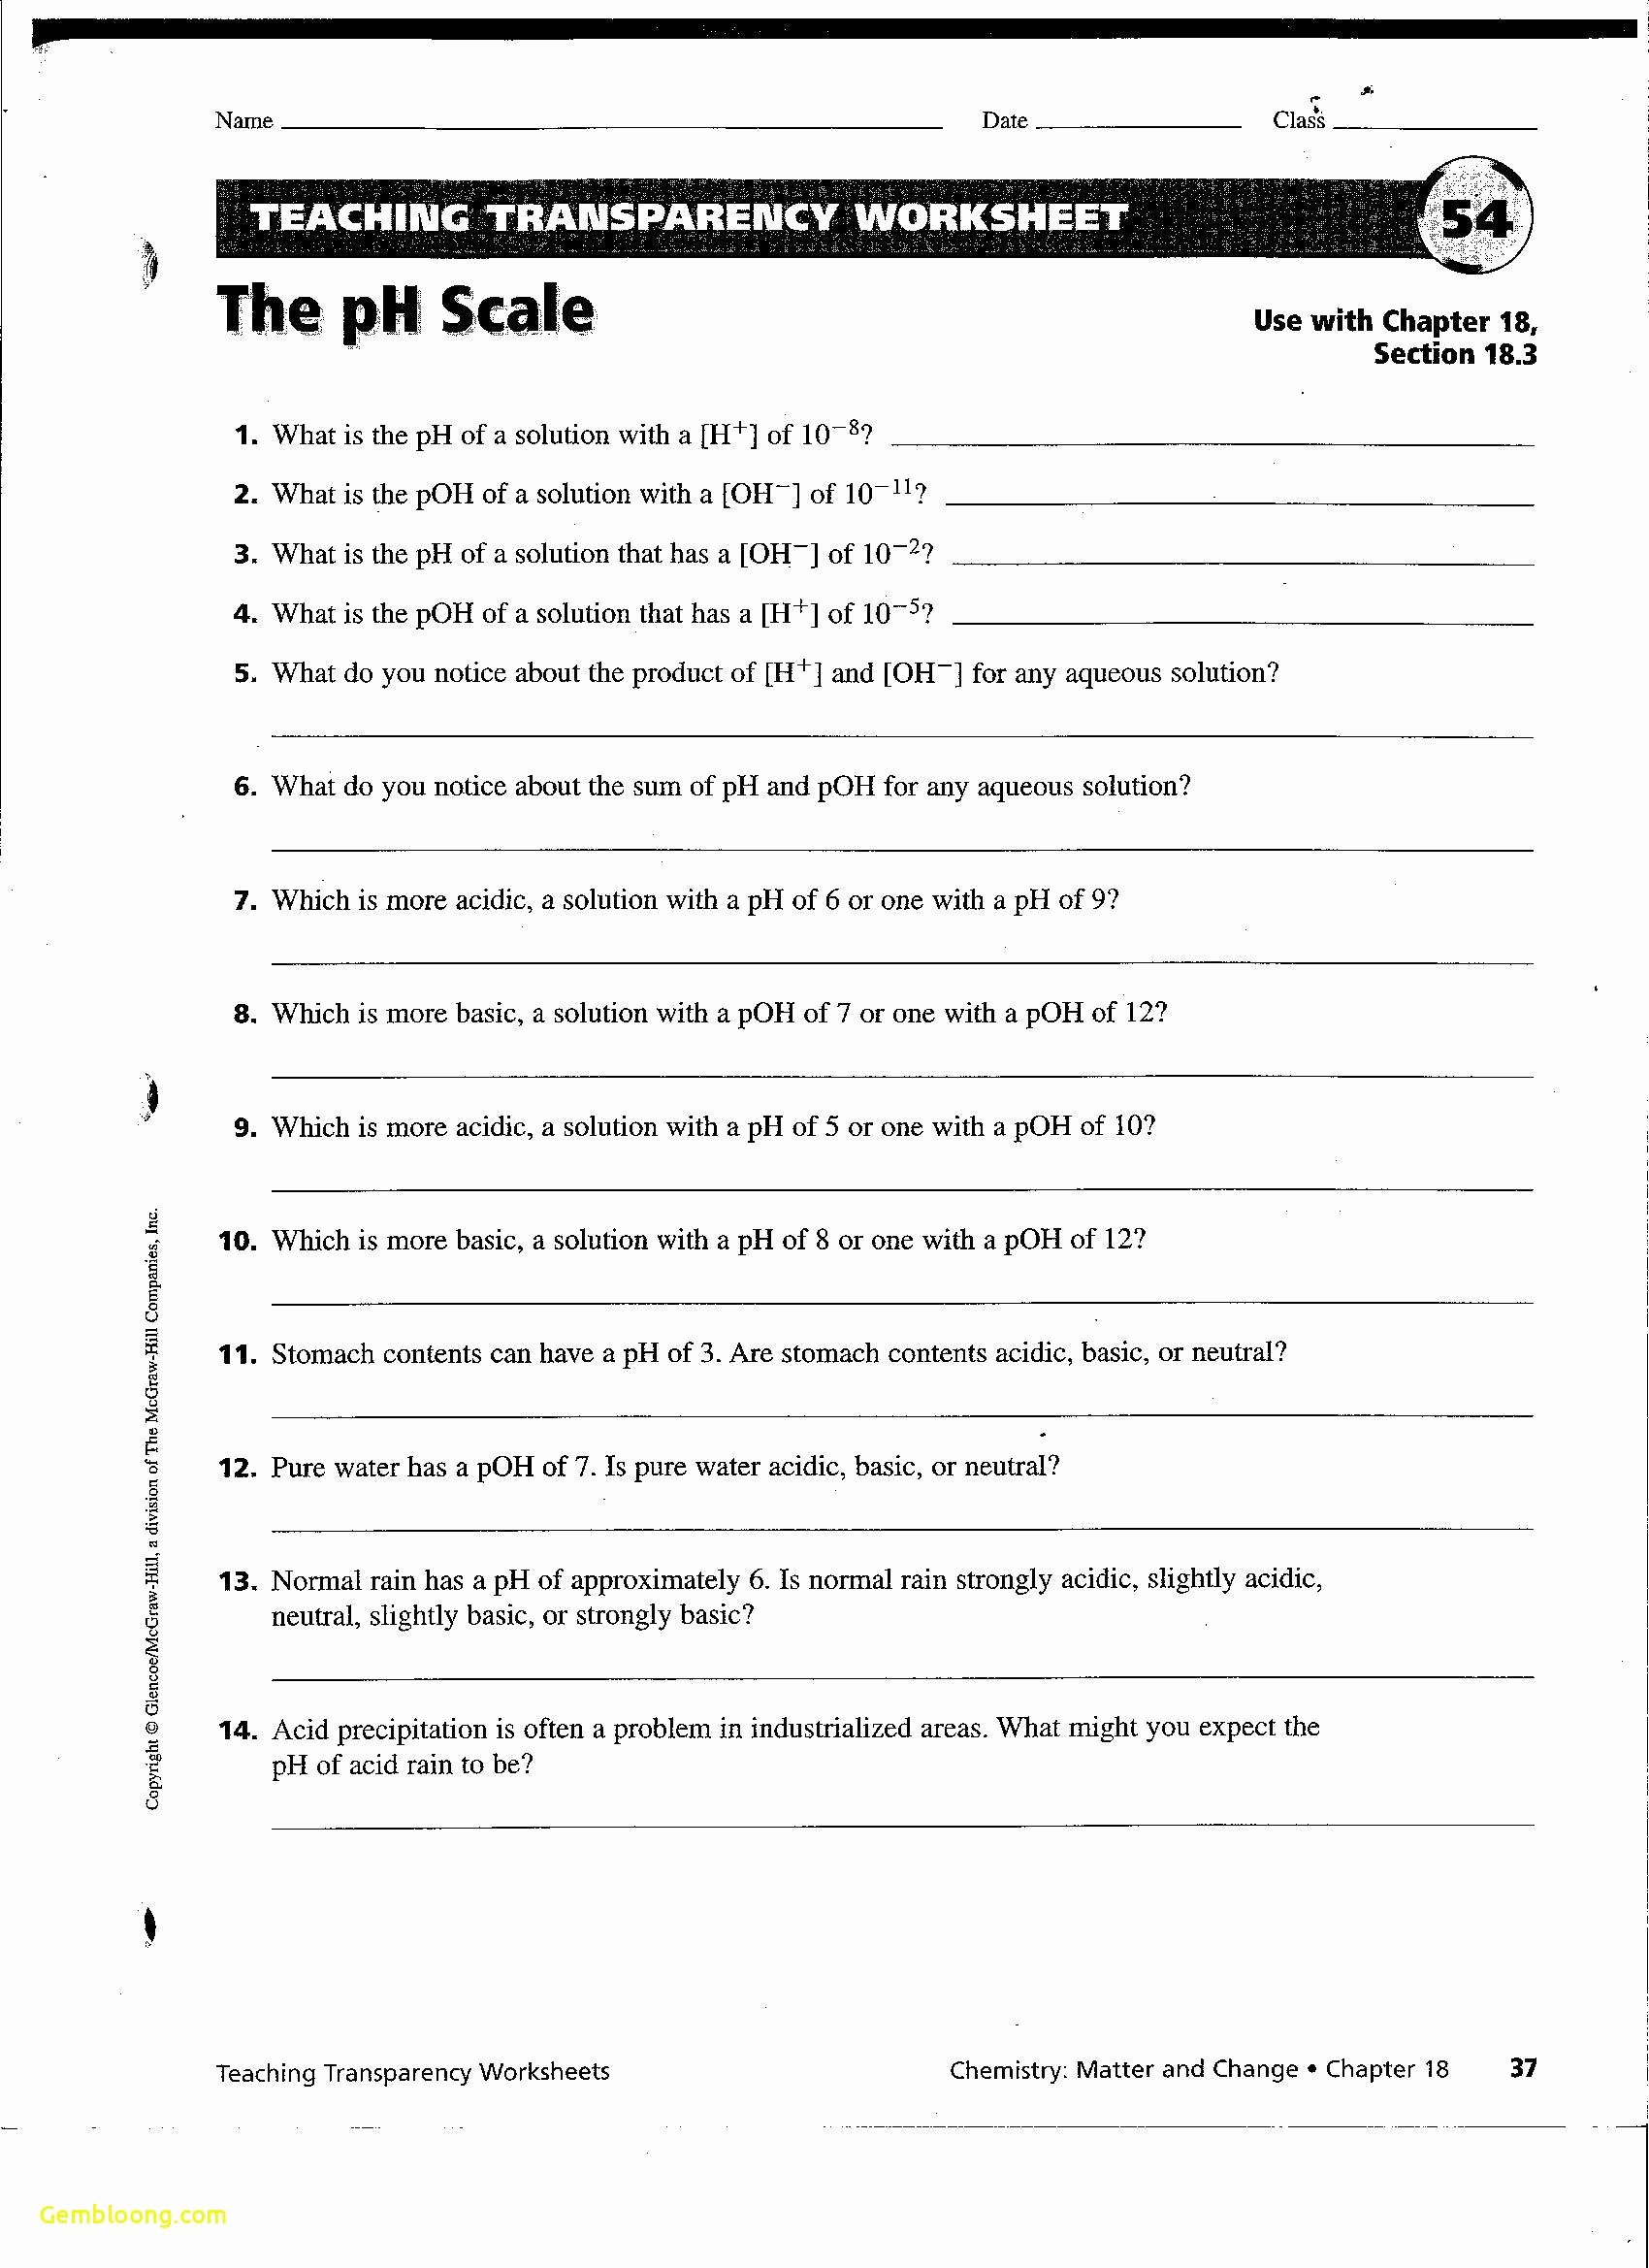 Ph and Poh Worksheet Answers Fresh Ph and Poh Worksheet Cramerforcongress